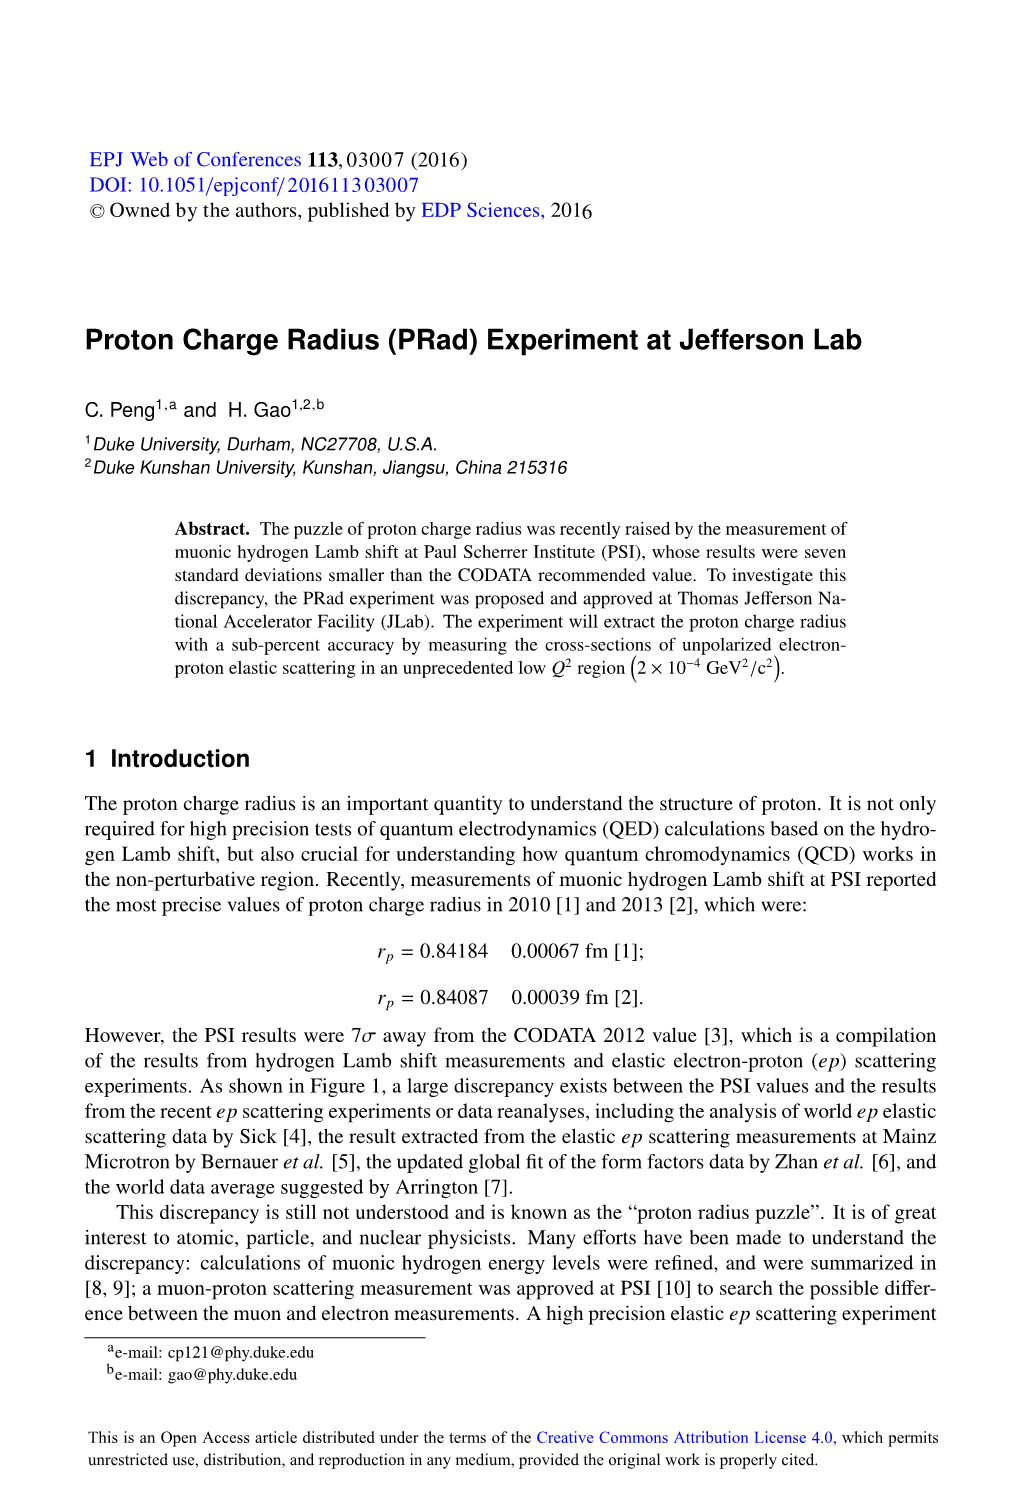 Proton Charge Radius (Prad) Experiment at Jefferson Lab